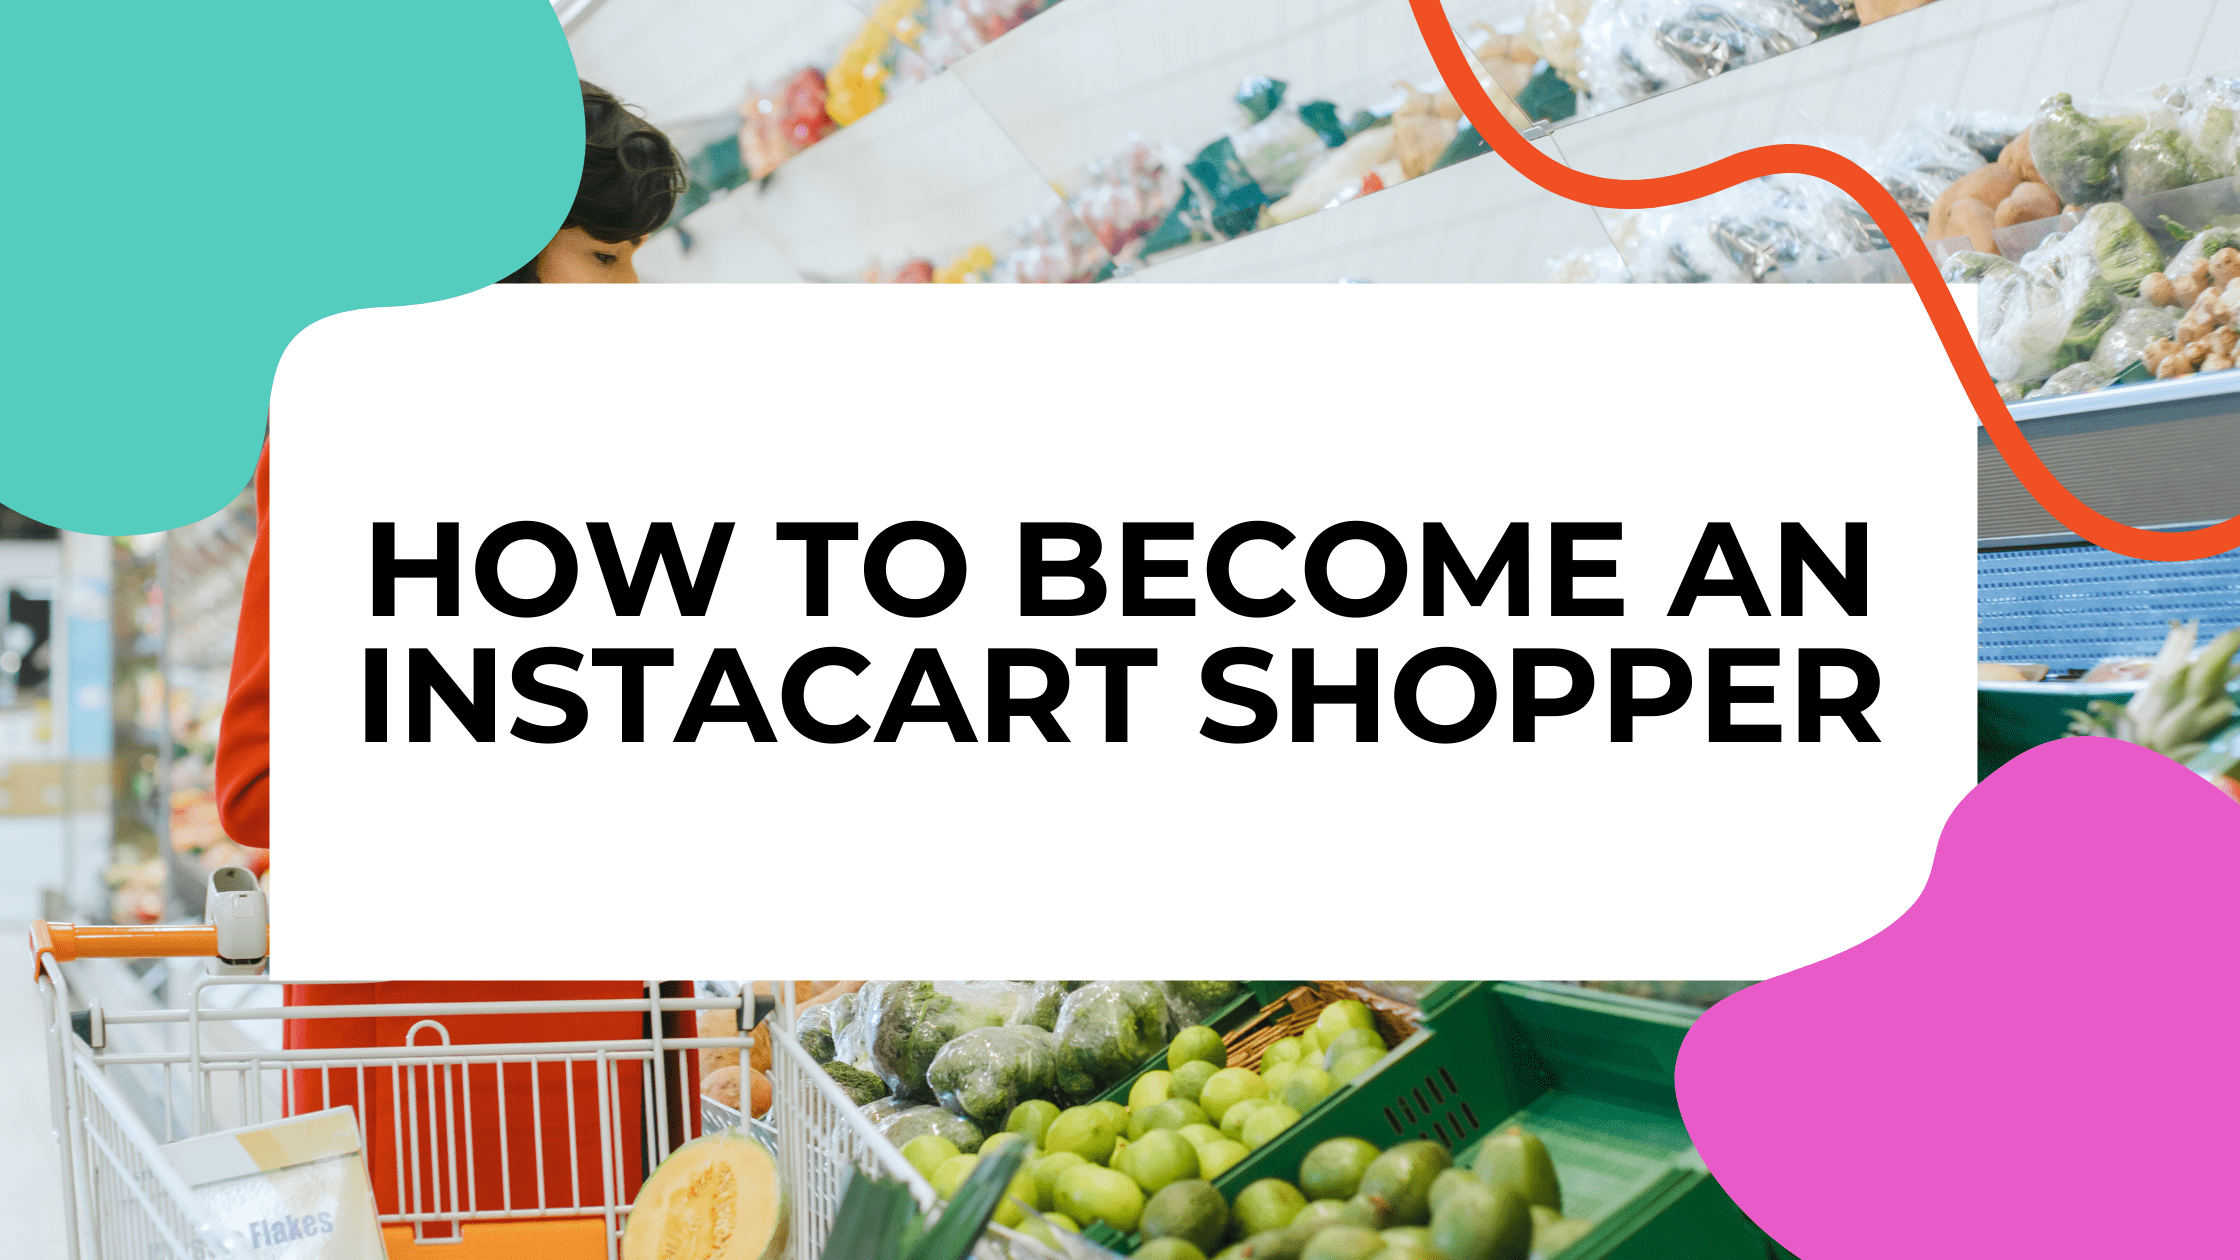 How to Become an Instacart Shopper